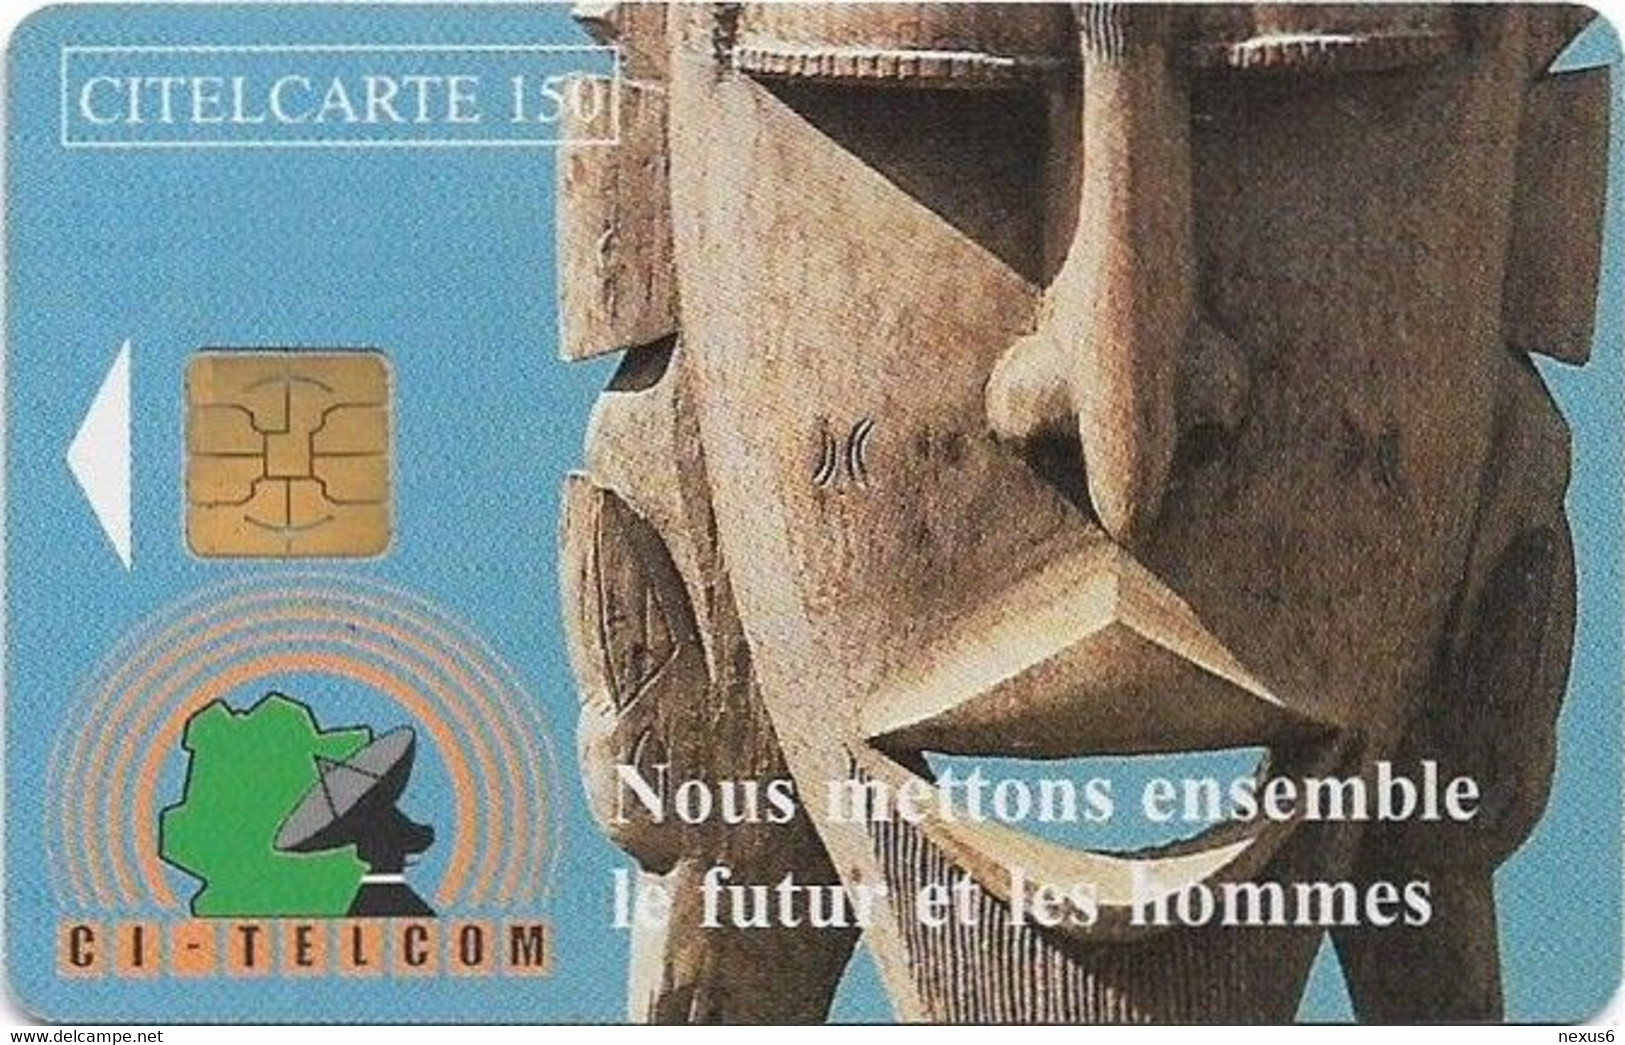 Ivory Coast - CI-Telcom - Carved Mask, Chip Philips, 150Units, 25.500ex, Used - Ivoorkust